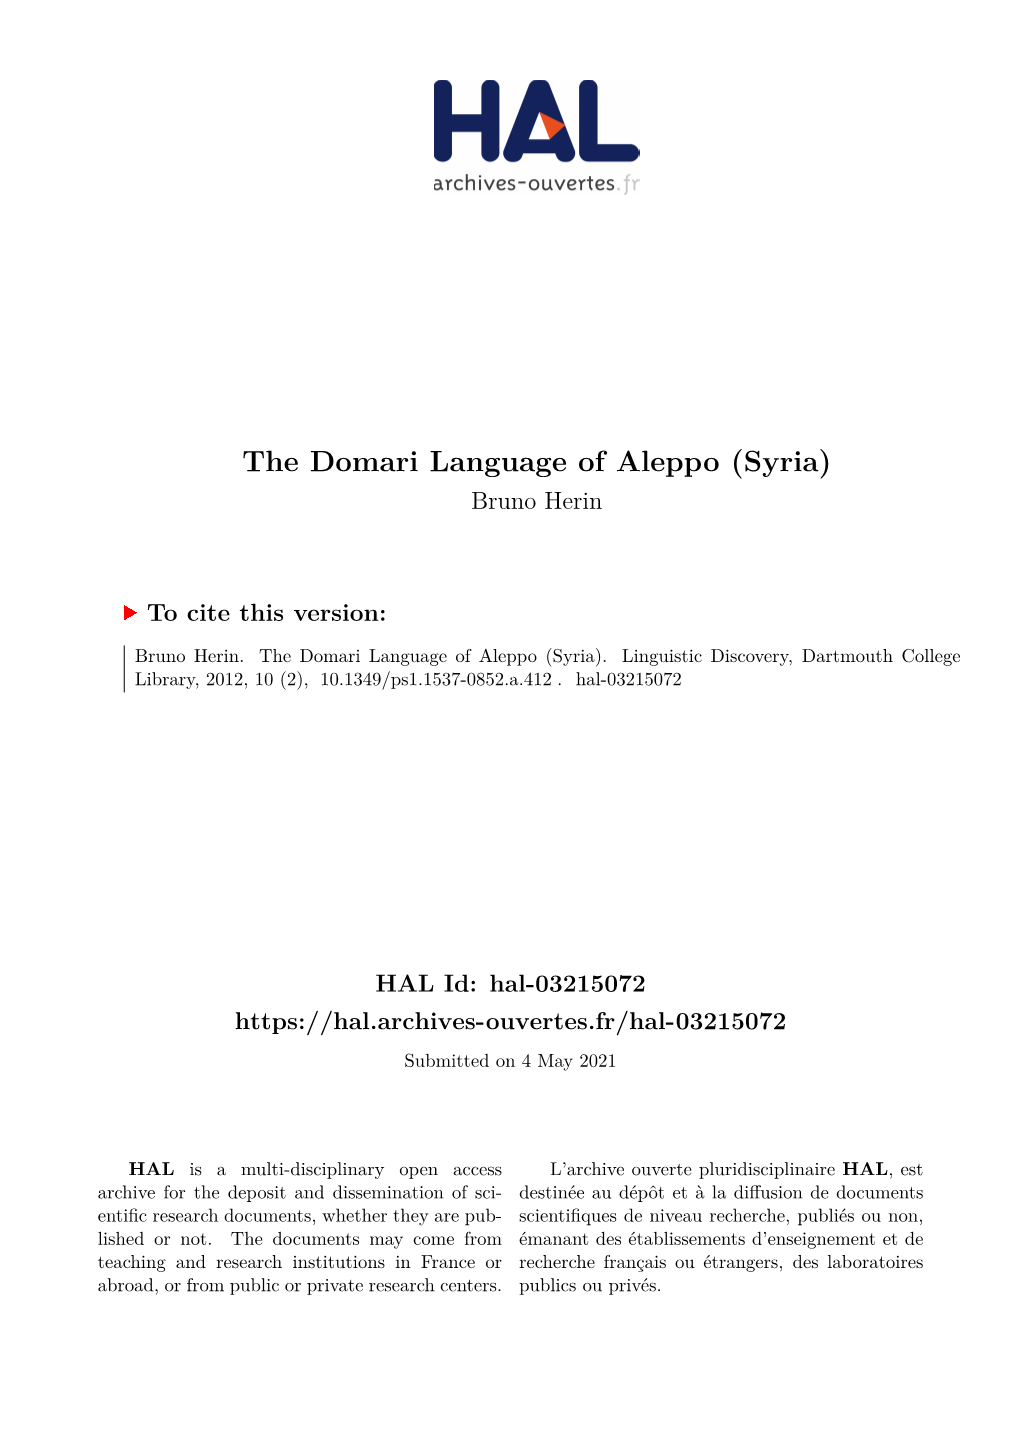 The Domari Language of Aleppo (Syria) Bruno Herin